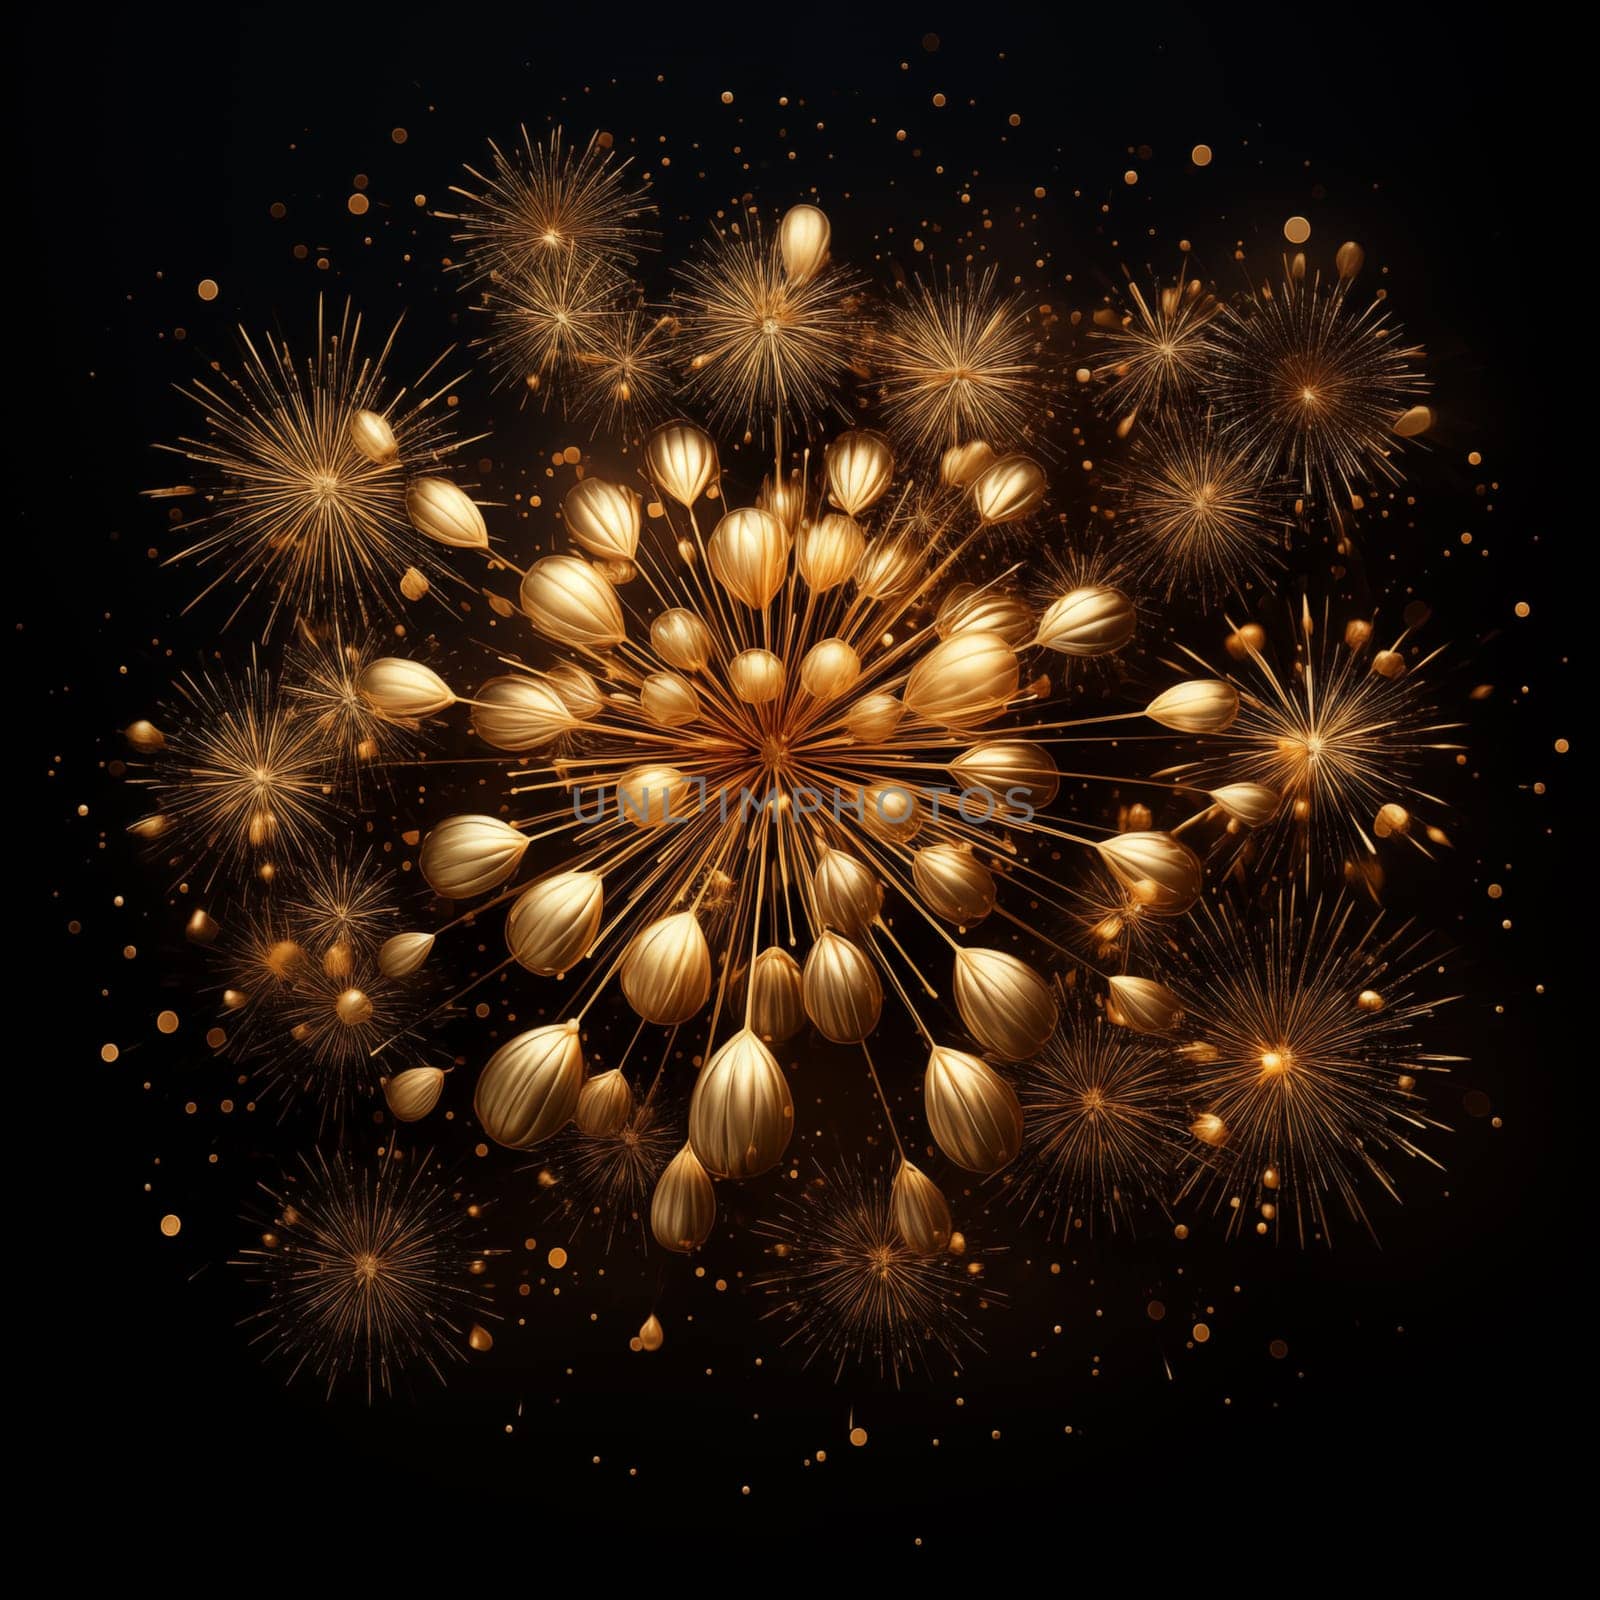 Beautiful golden fireworks on black background isolated by Zakharova